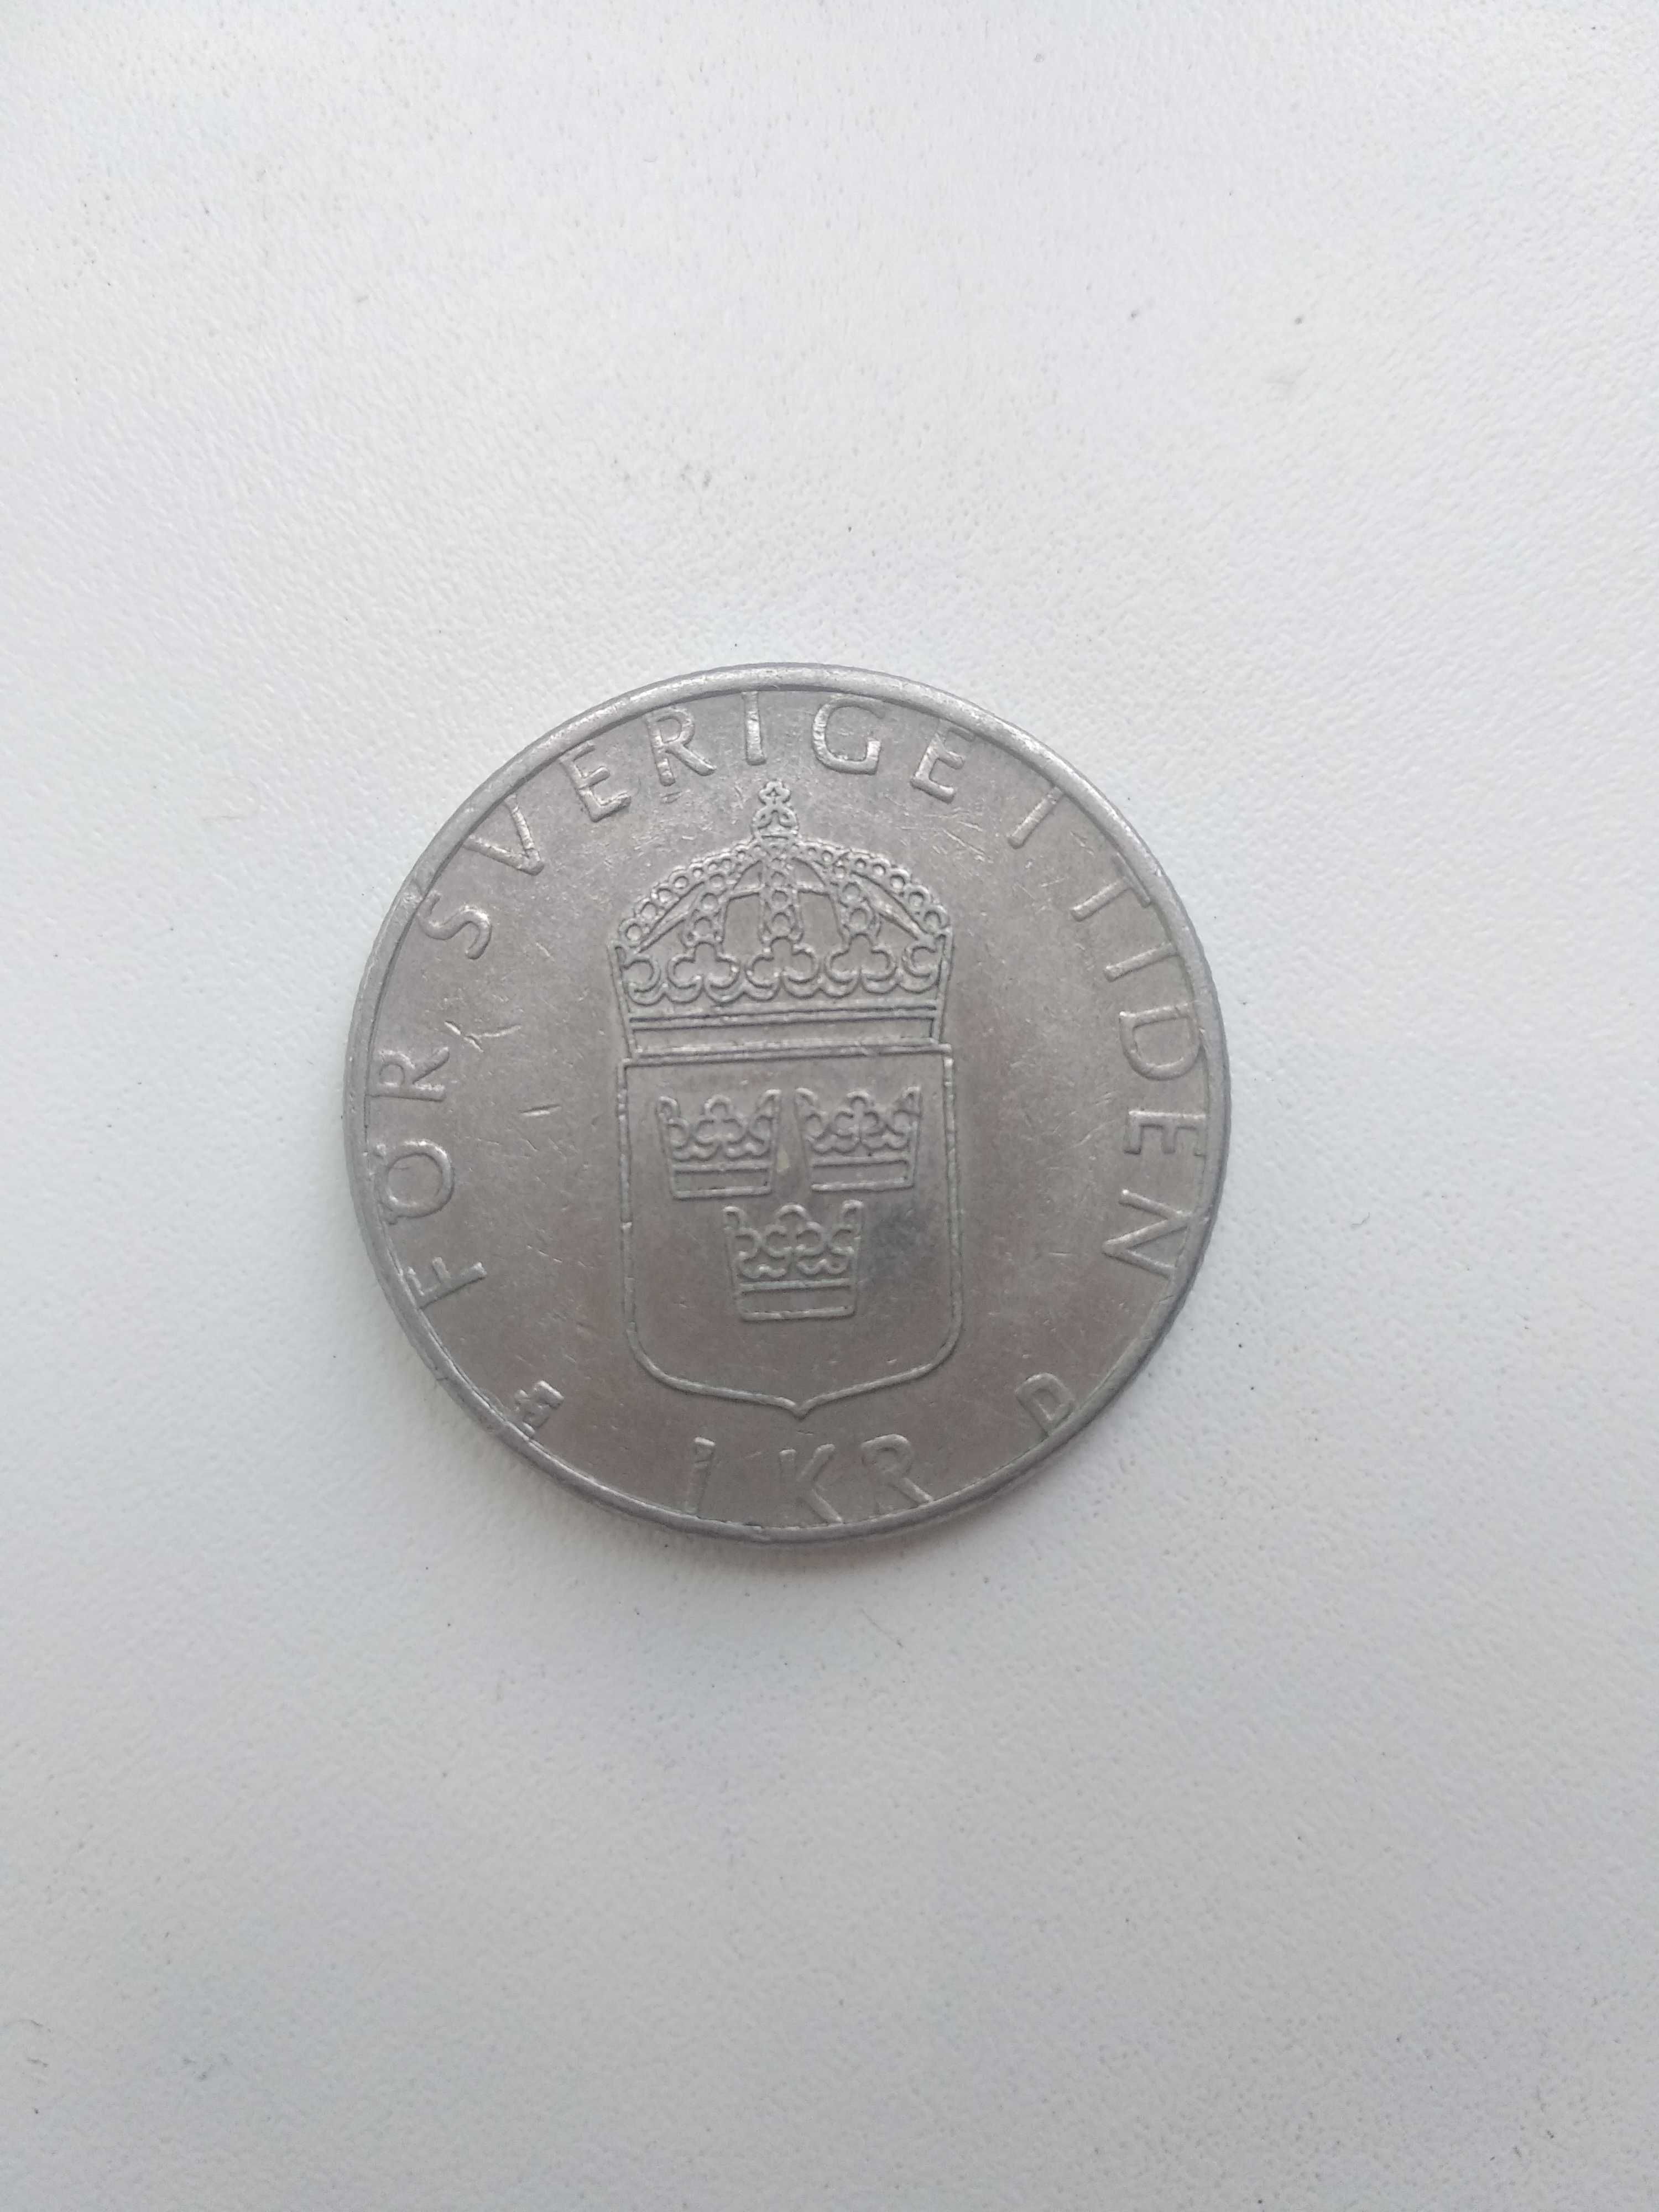 Набор монет  Швеции 1964-2006 гг.